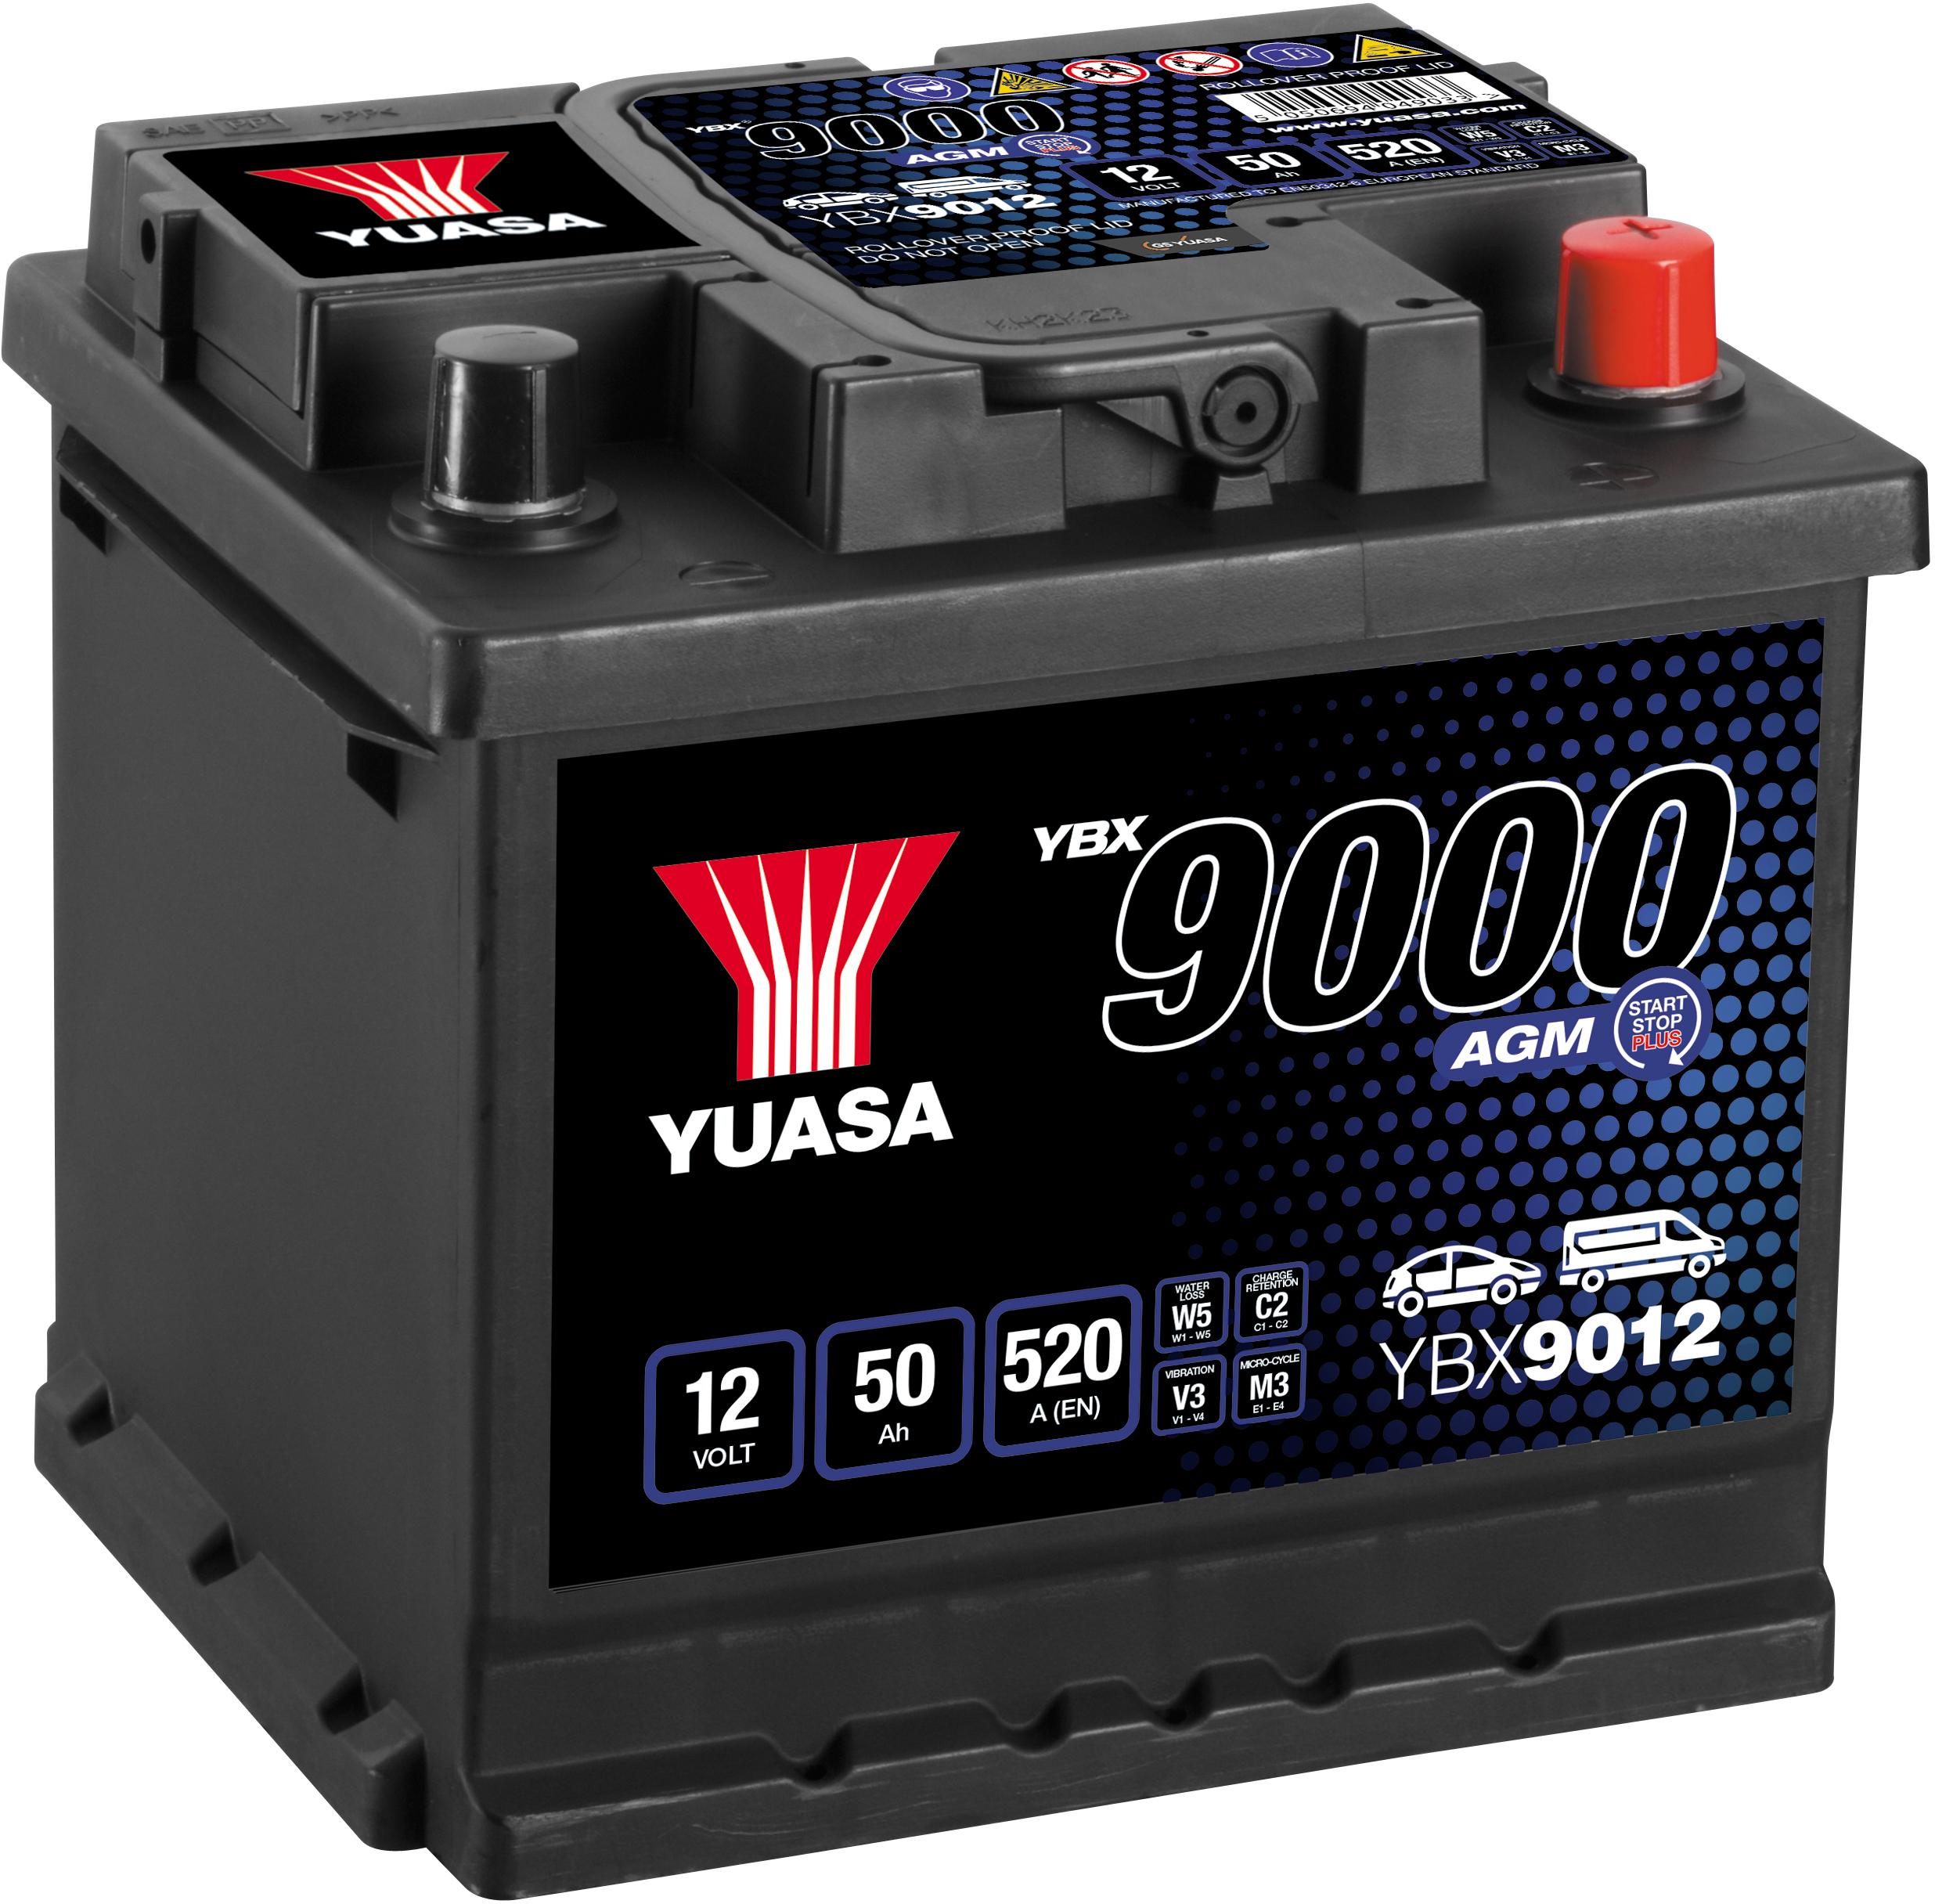 Ybx9012 12V 50Ah 520A Yuasa Agm Start Stop Plus Battery